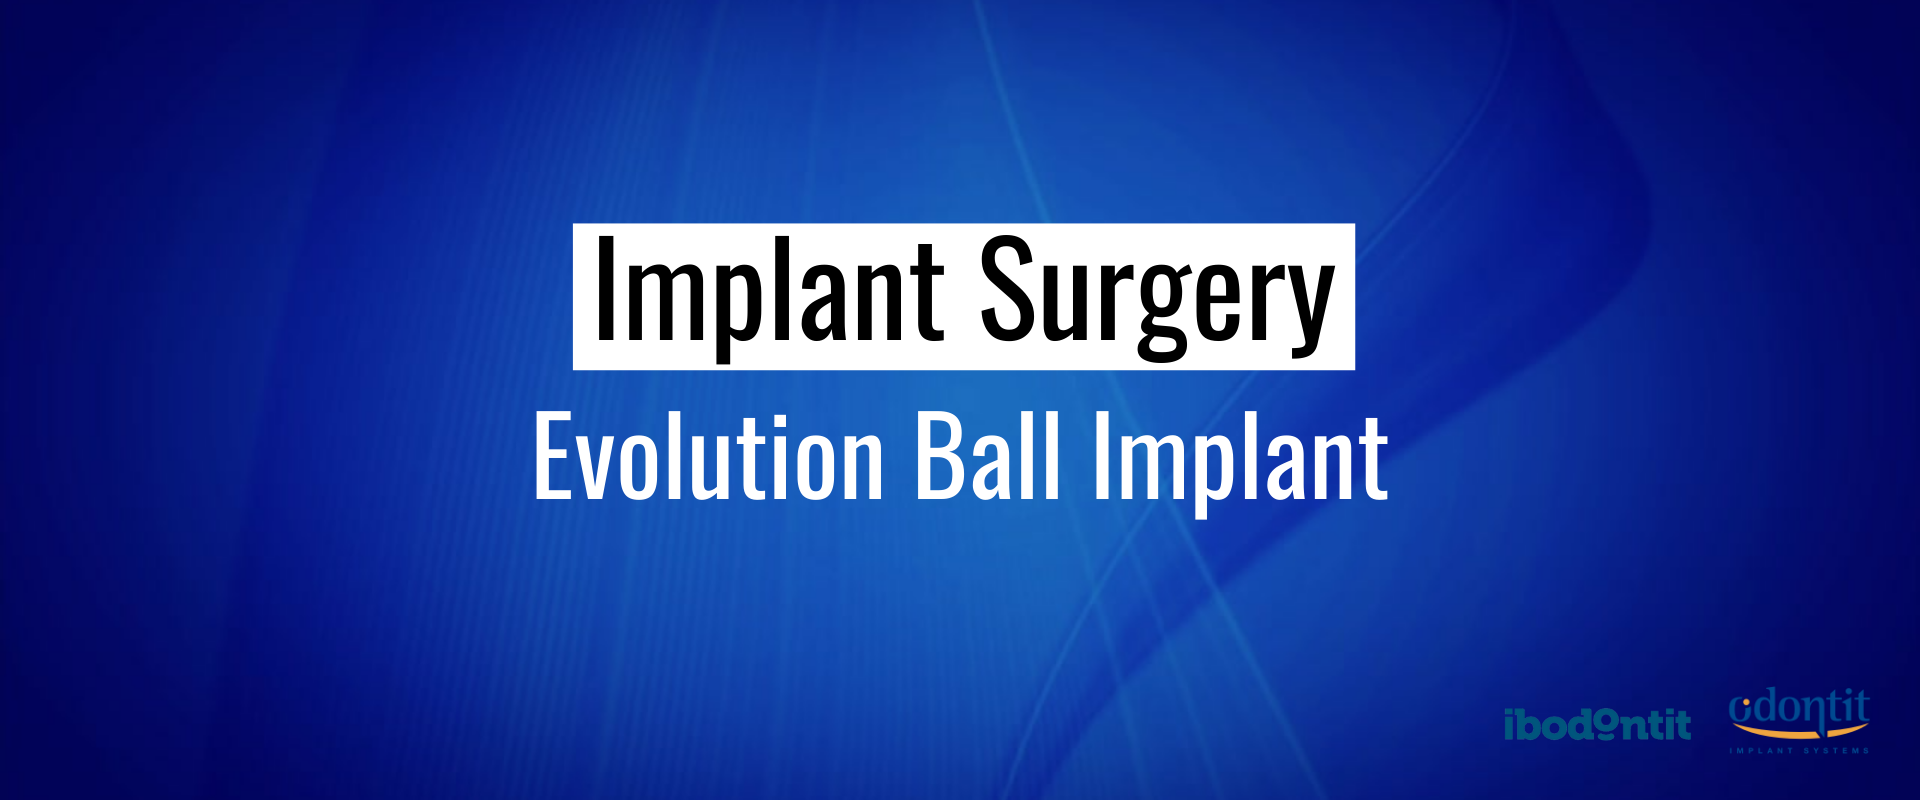 Evolution Ball Implant